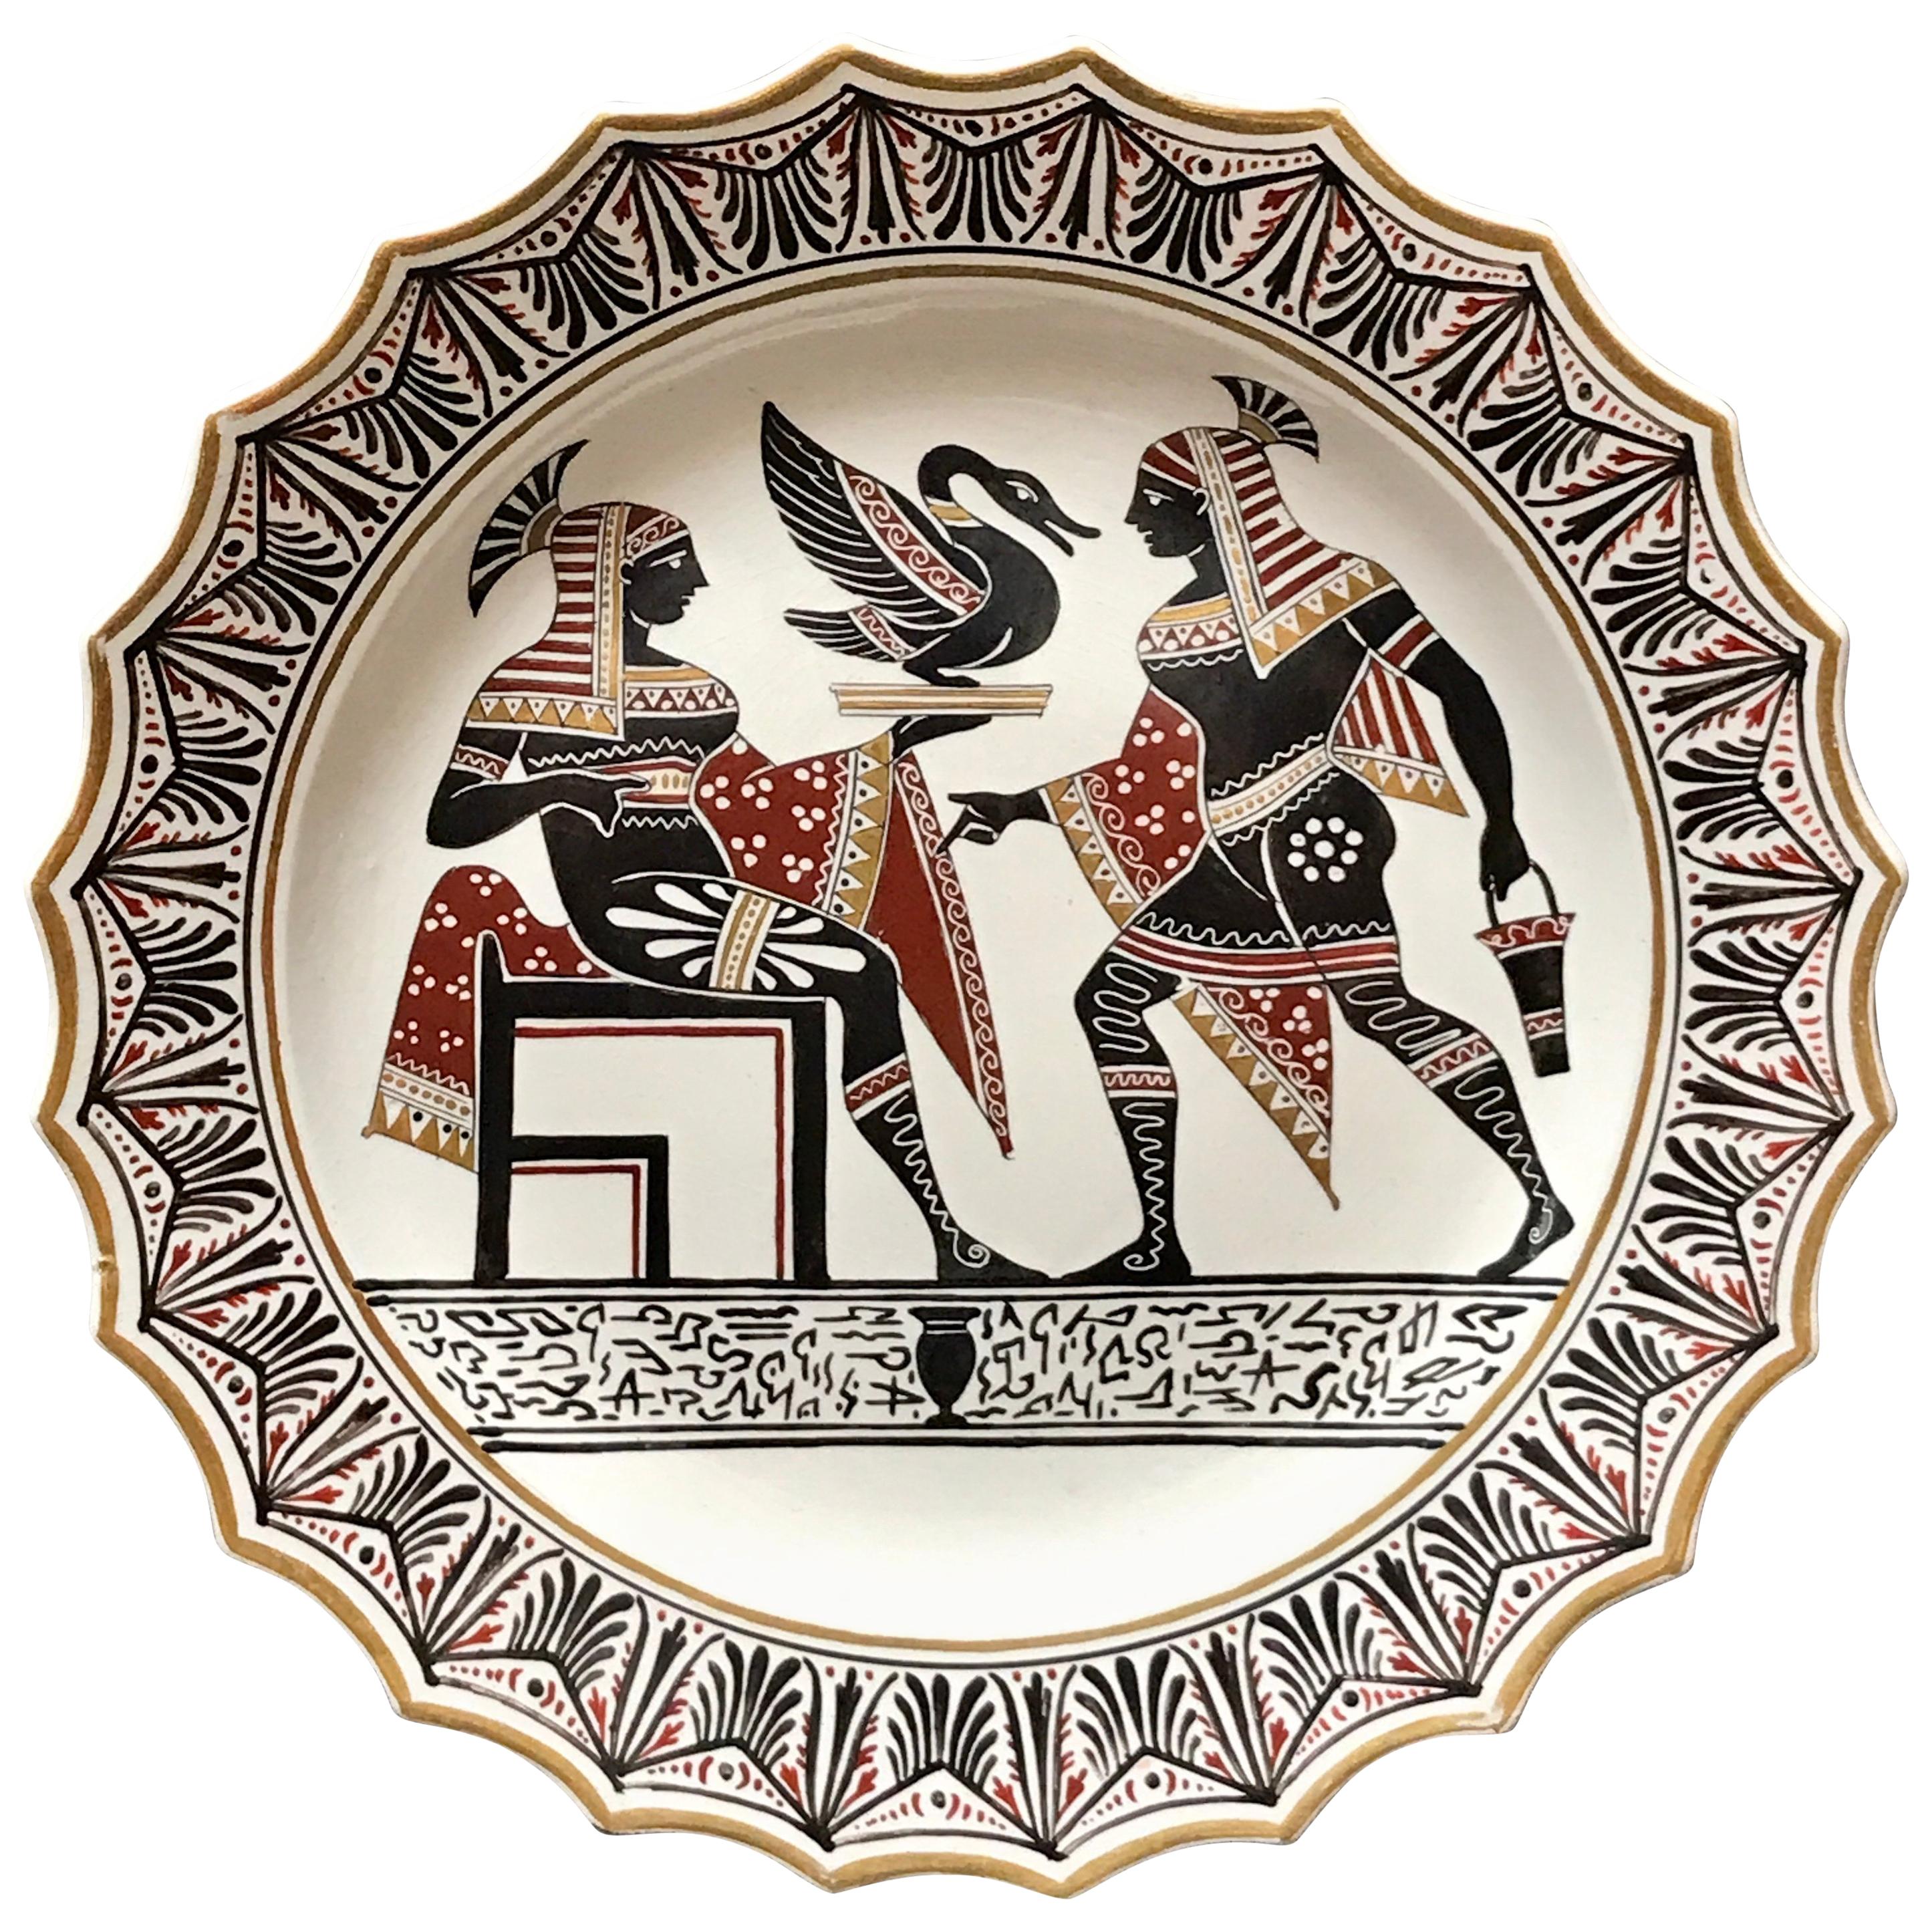 Giustiniani Egyptomania Pottery Plate with Gilt Highlights, Urn For Sale